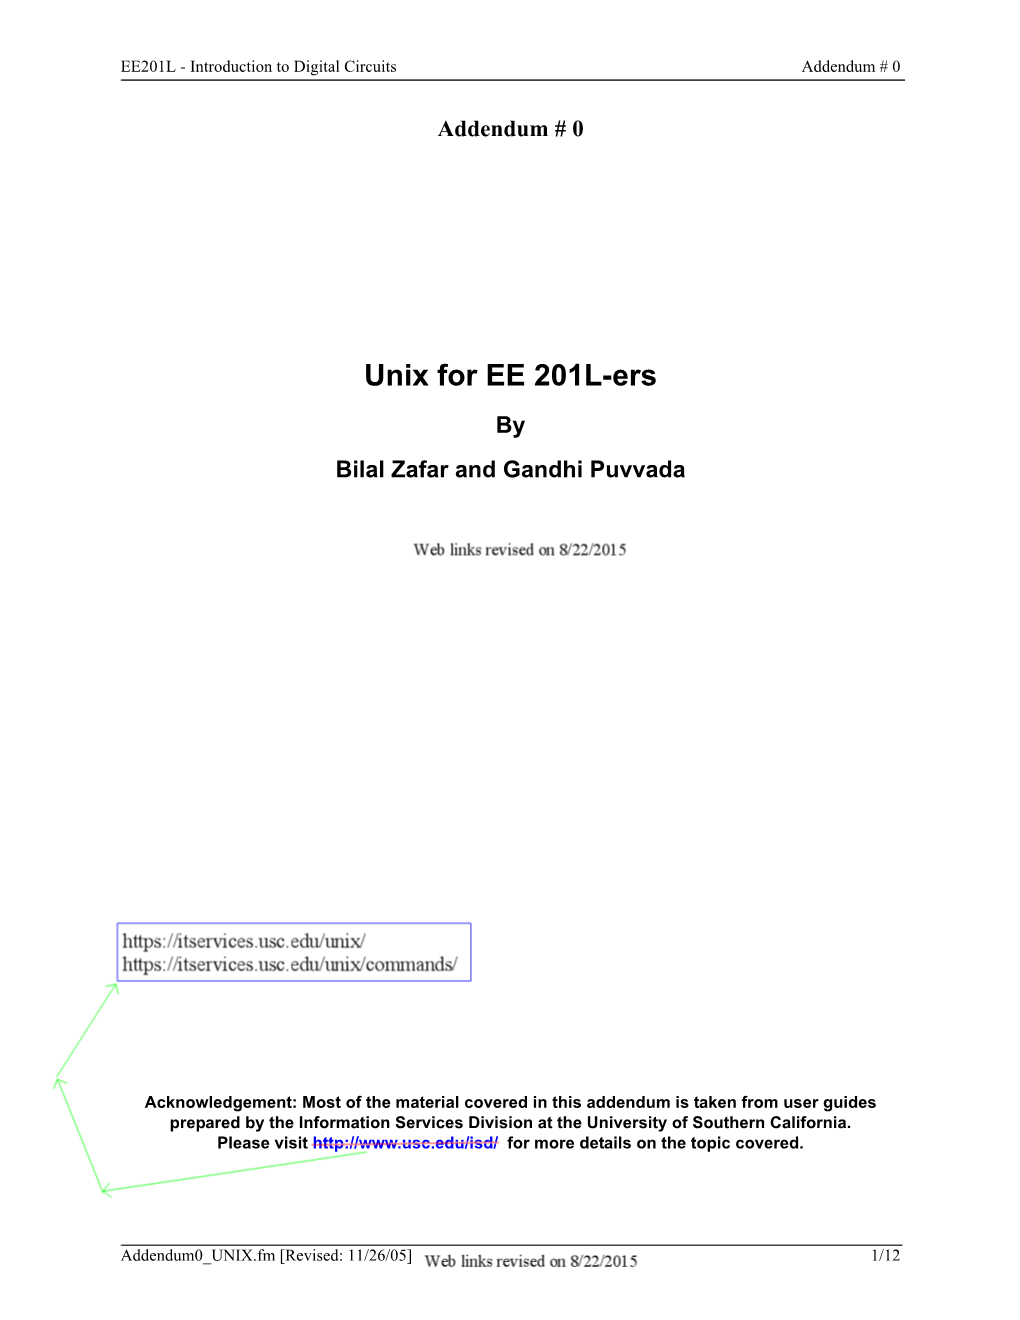 Unix for EE 201L-Ers by Bilal Zafar and Gandhi Puvvada